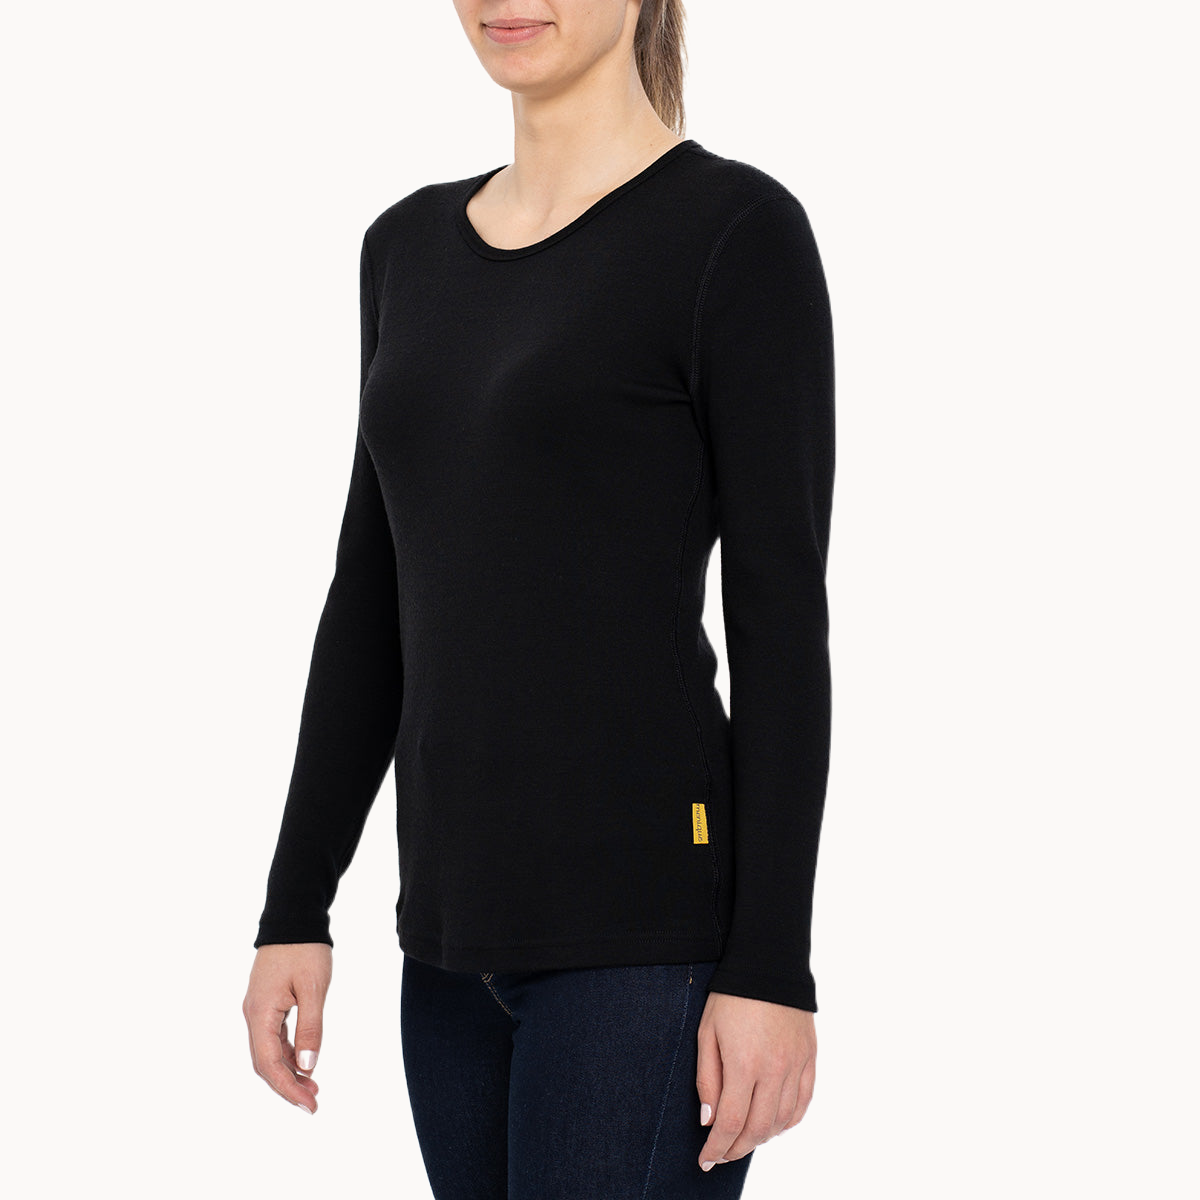 MENIQUE Long Sleeve Crew 100% Merino Wool Womens Shirt Black